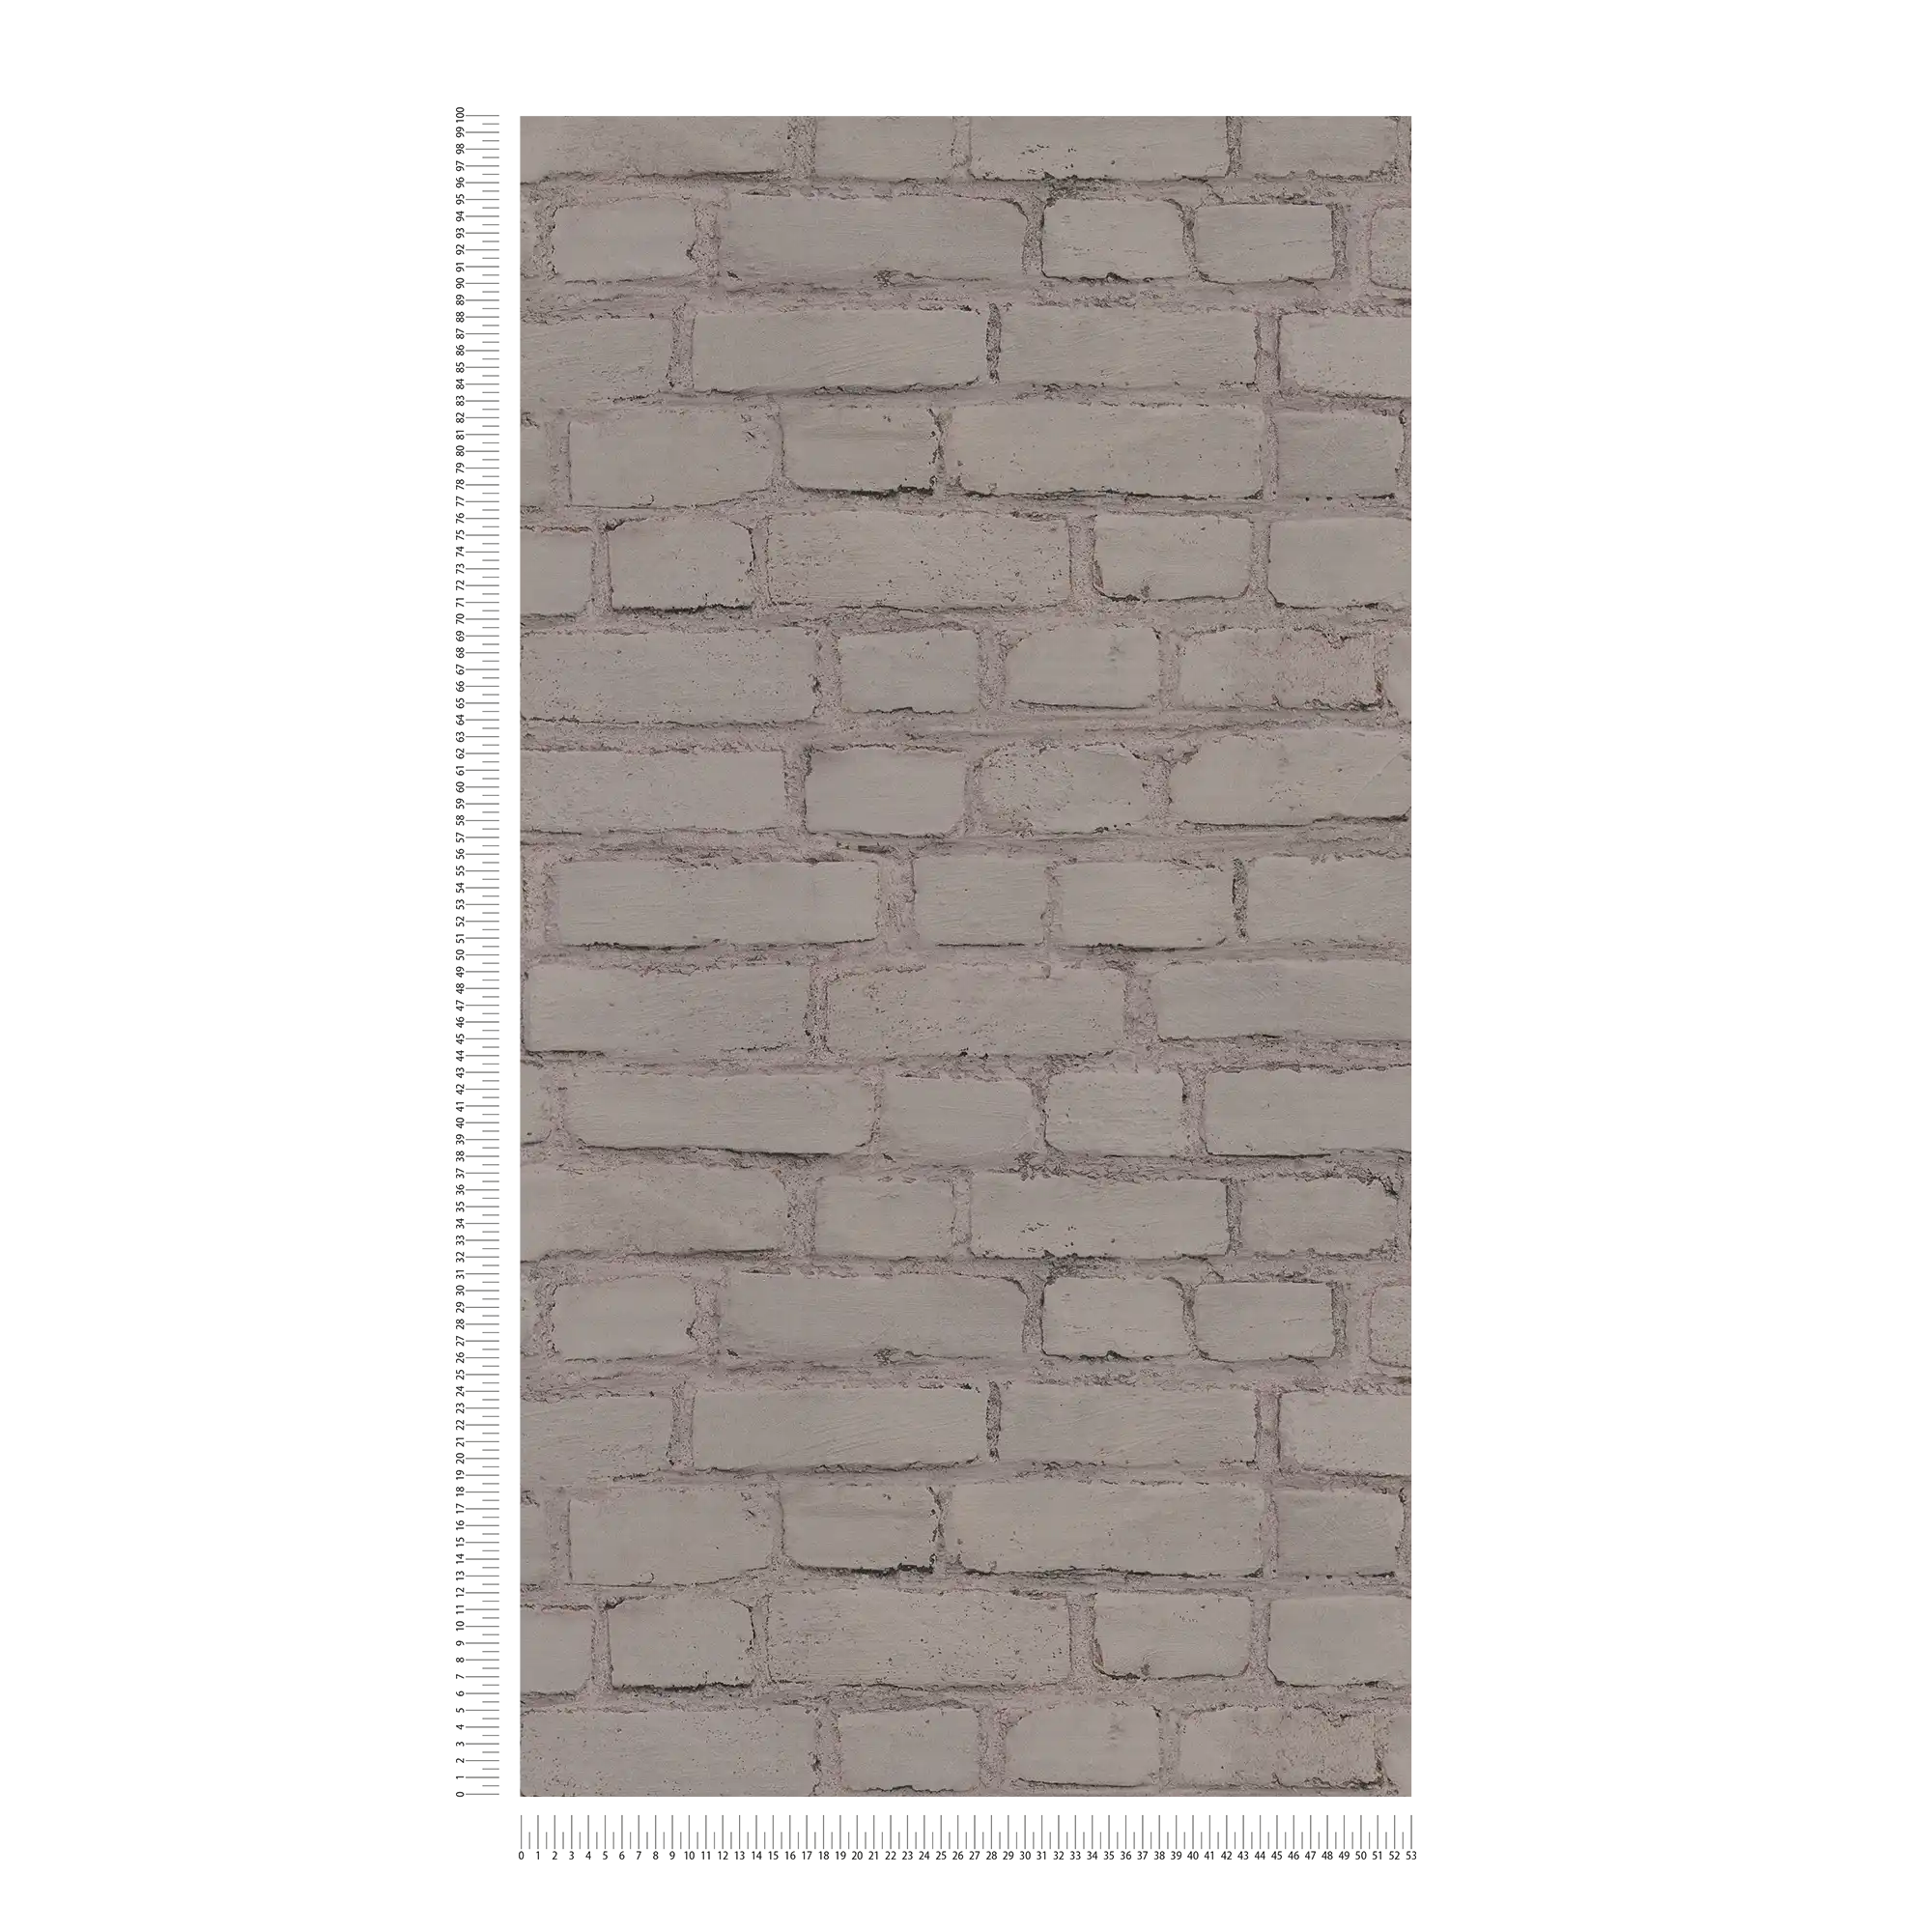             Steintapete Mauer in Klinker-Optik – Grau, Taupe
        